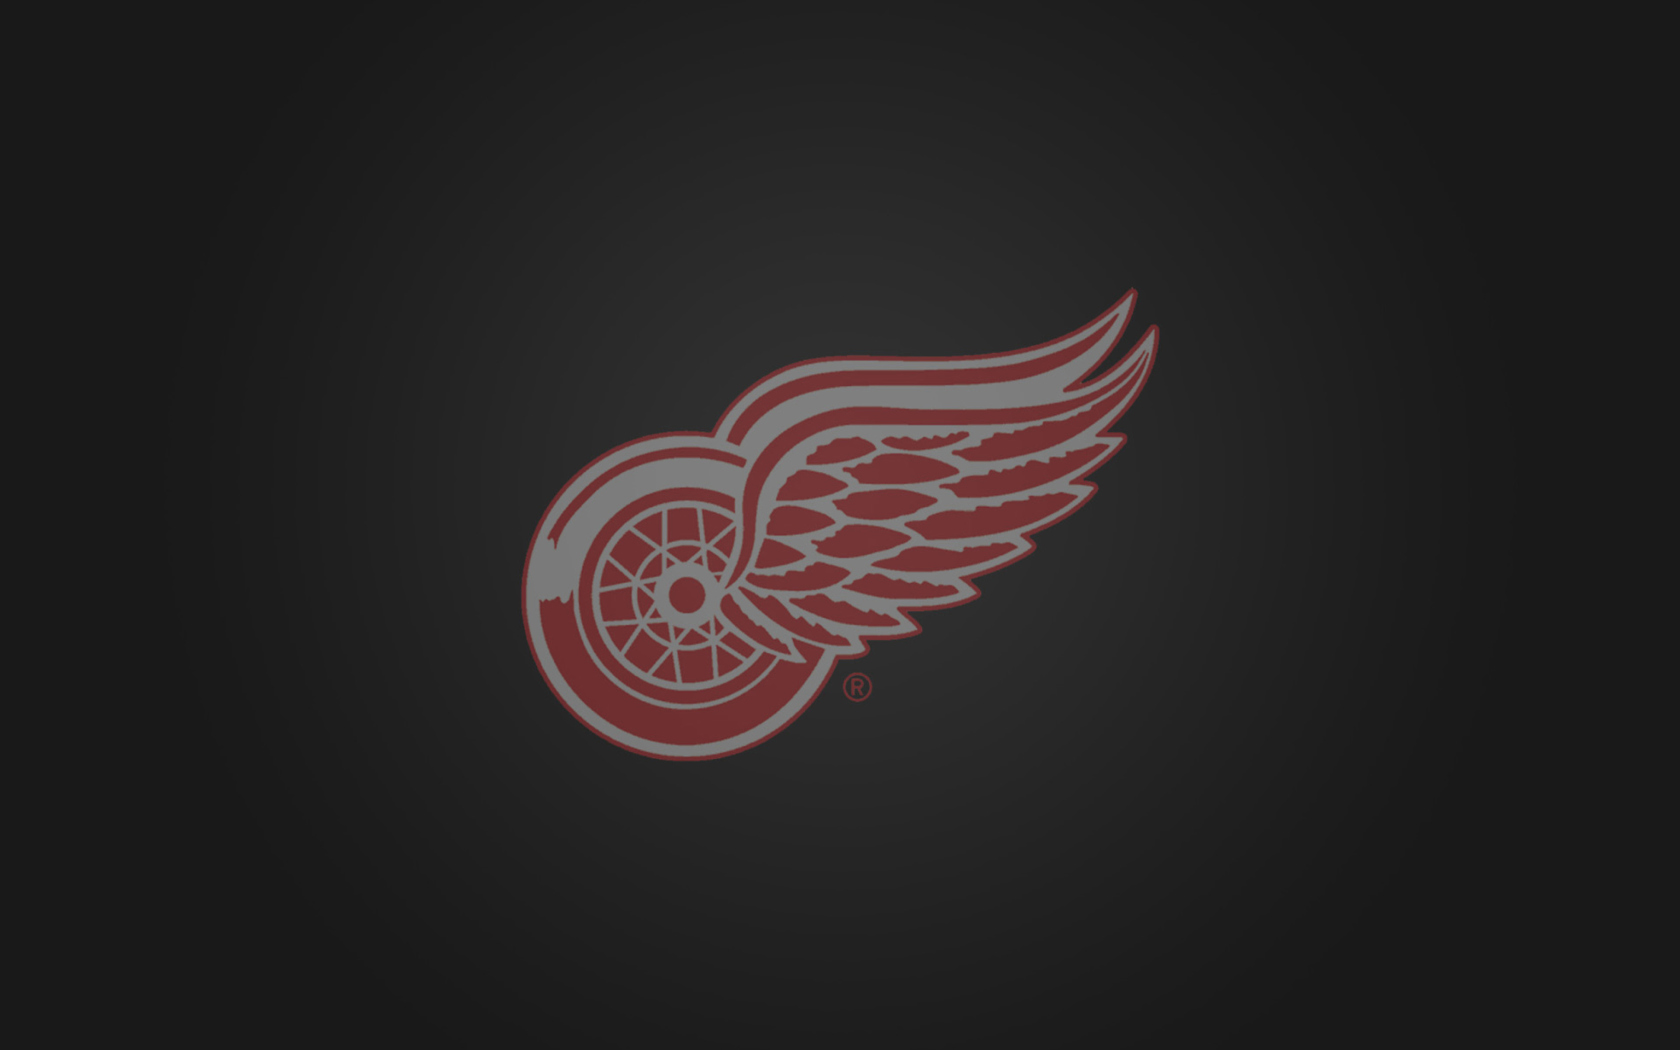 Detroit Red Wings wallpaper 1680x1050